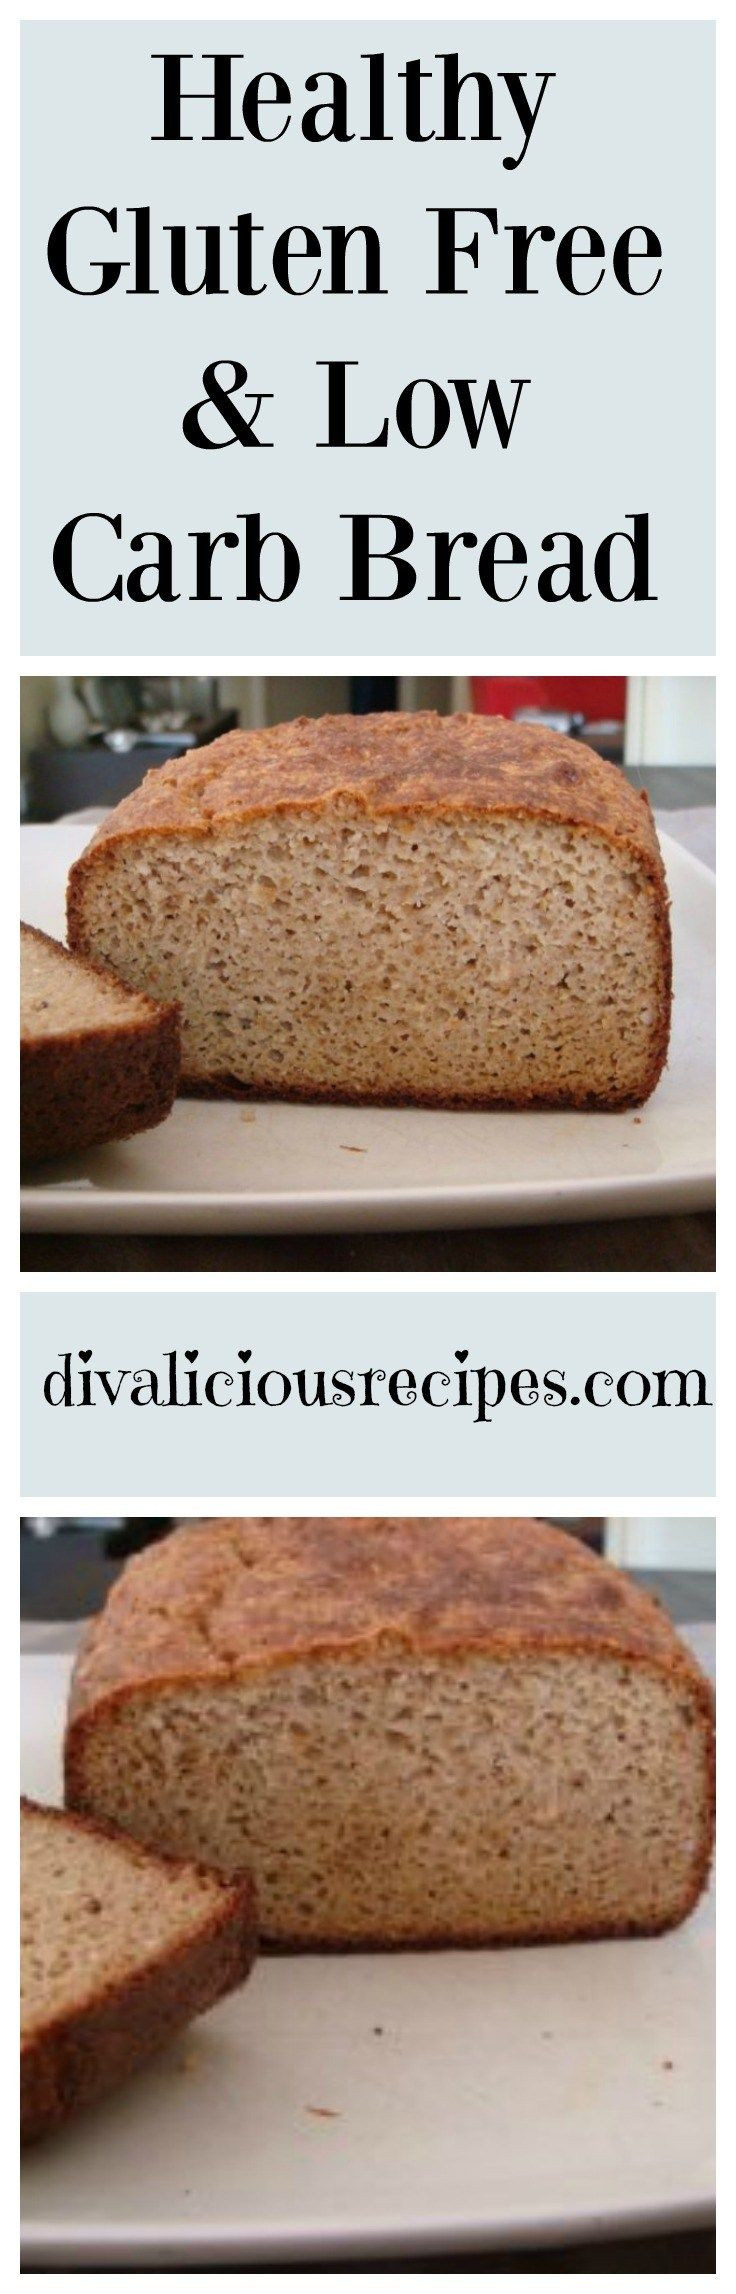 Healthy Low Carb Bread Recipes
 Healthy Gluten Free & Low Carb Bread